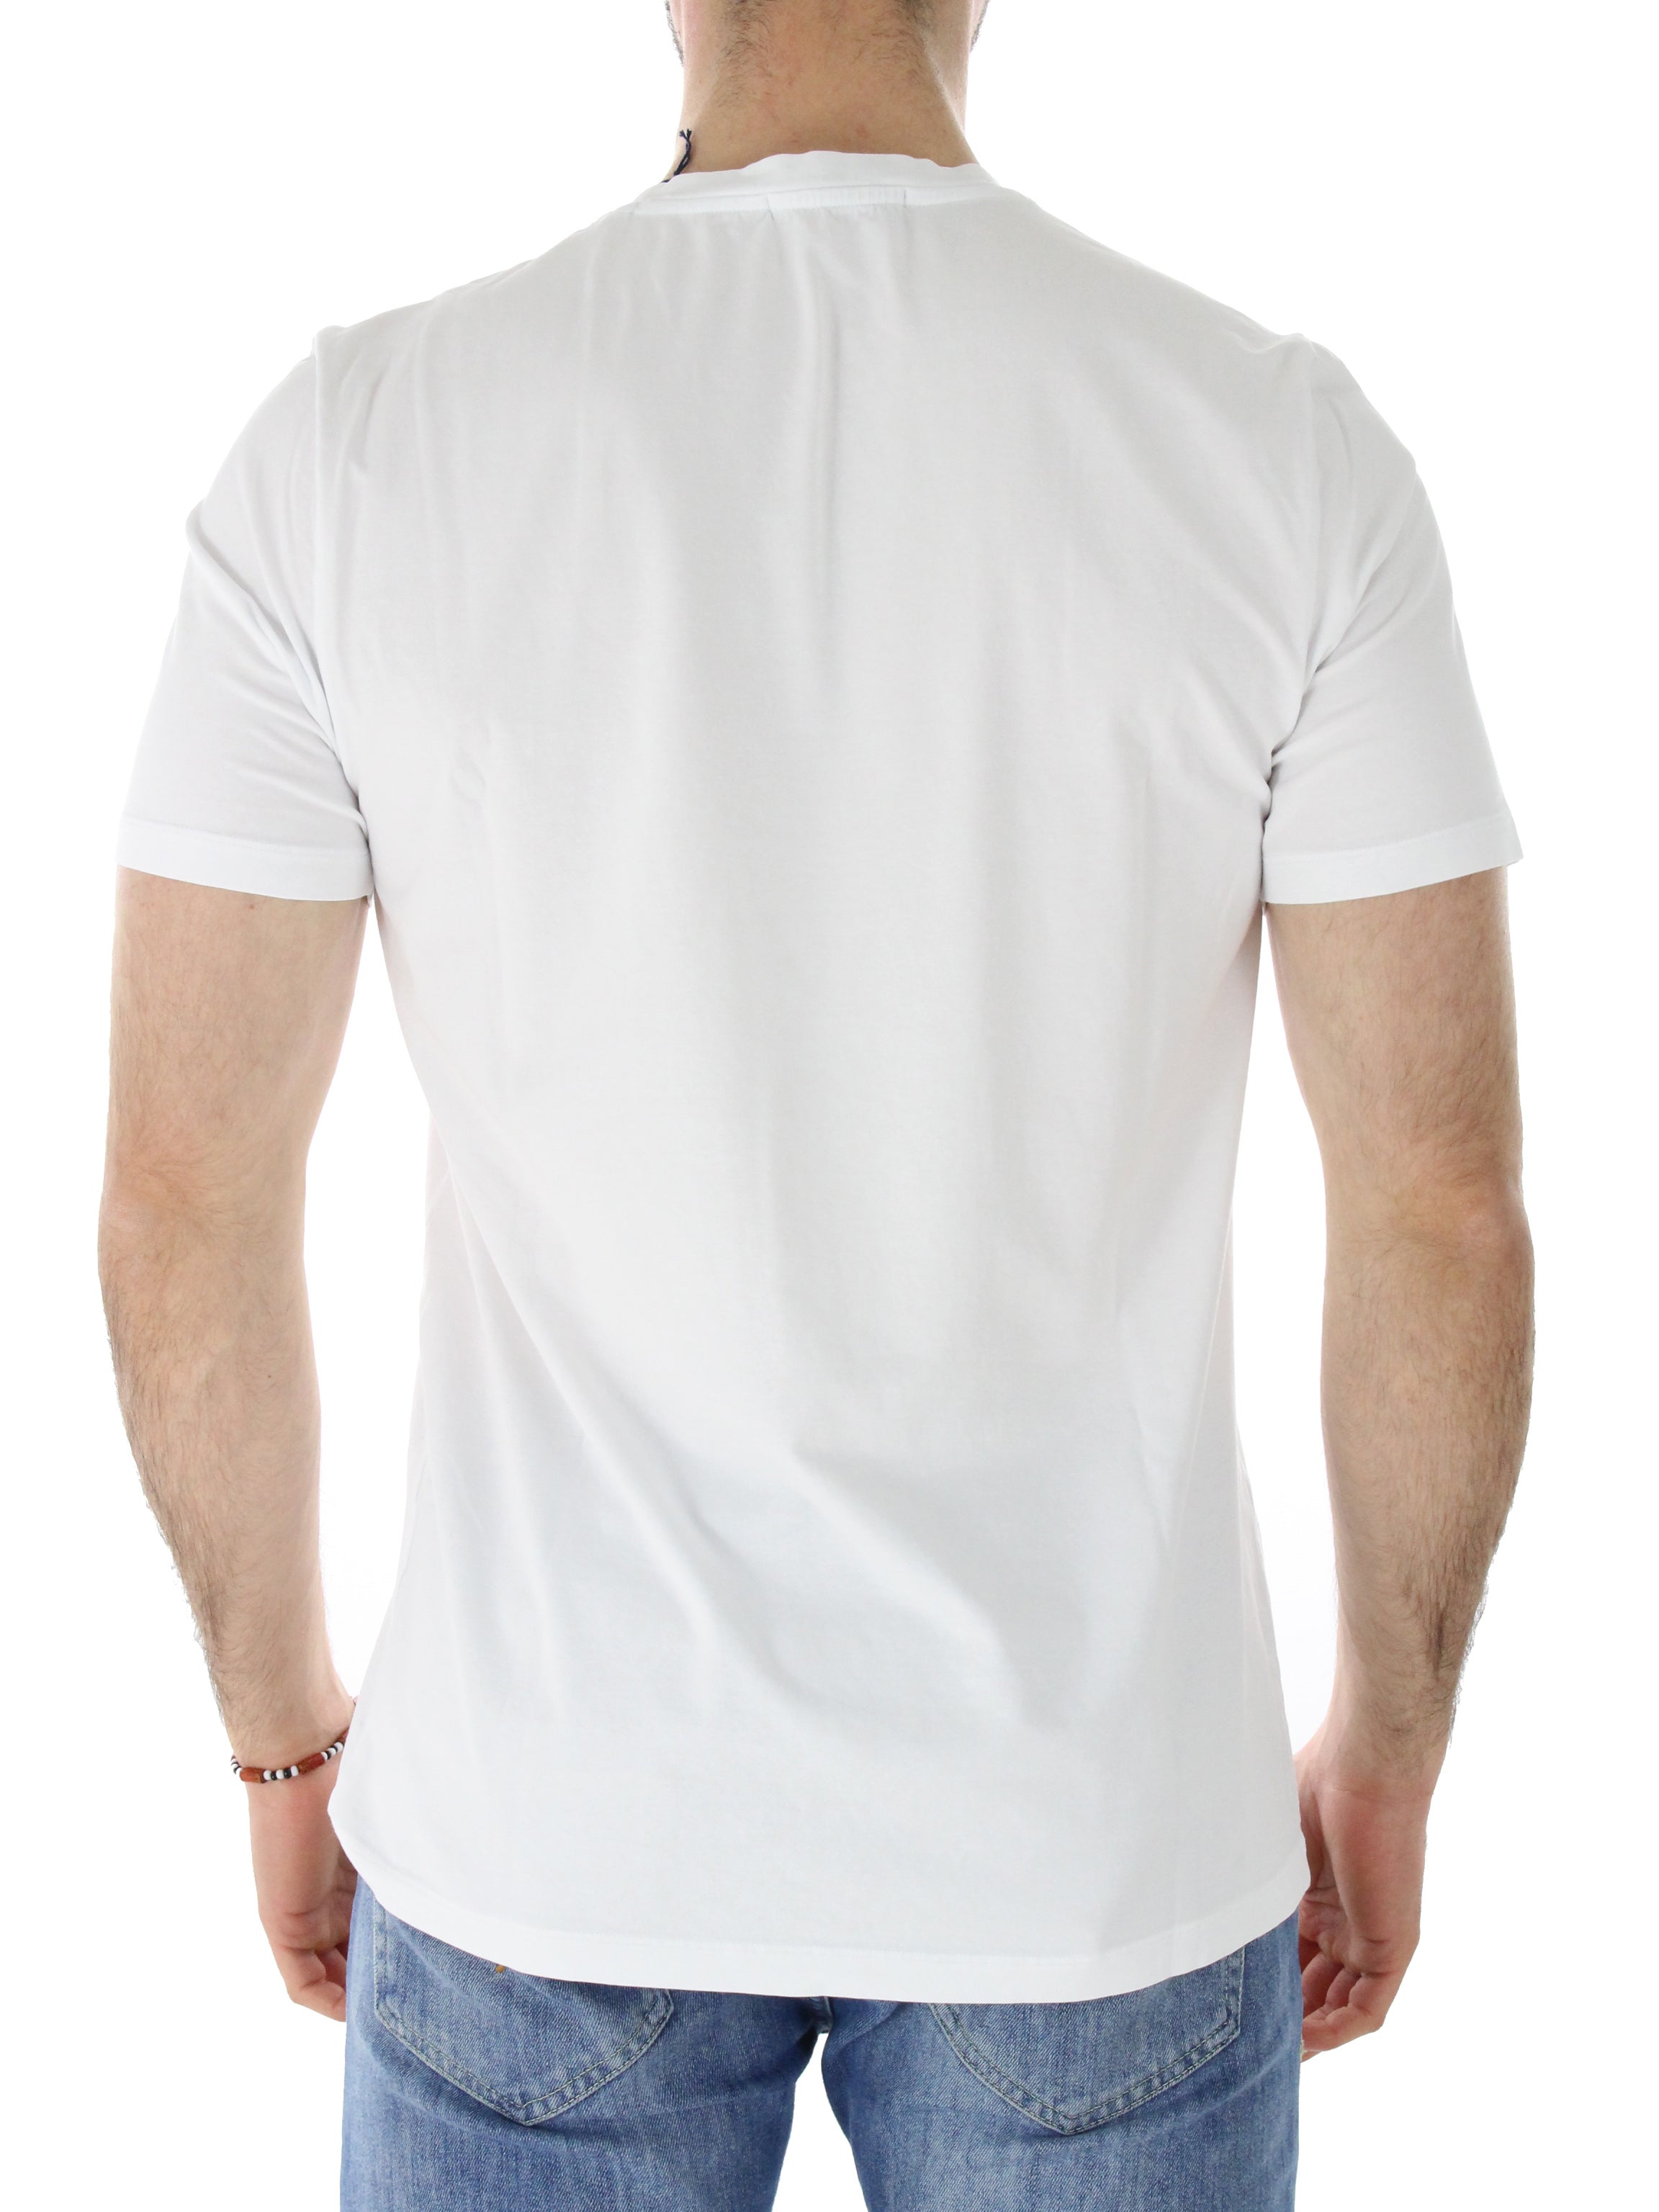 White MH-941 print jersey t-shirt